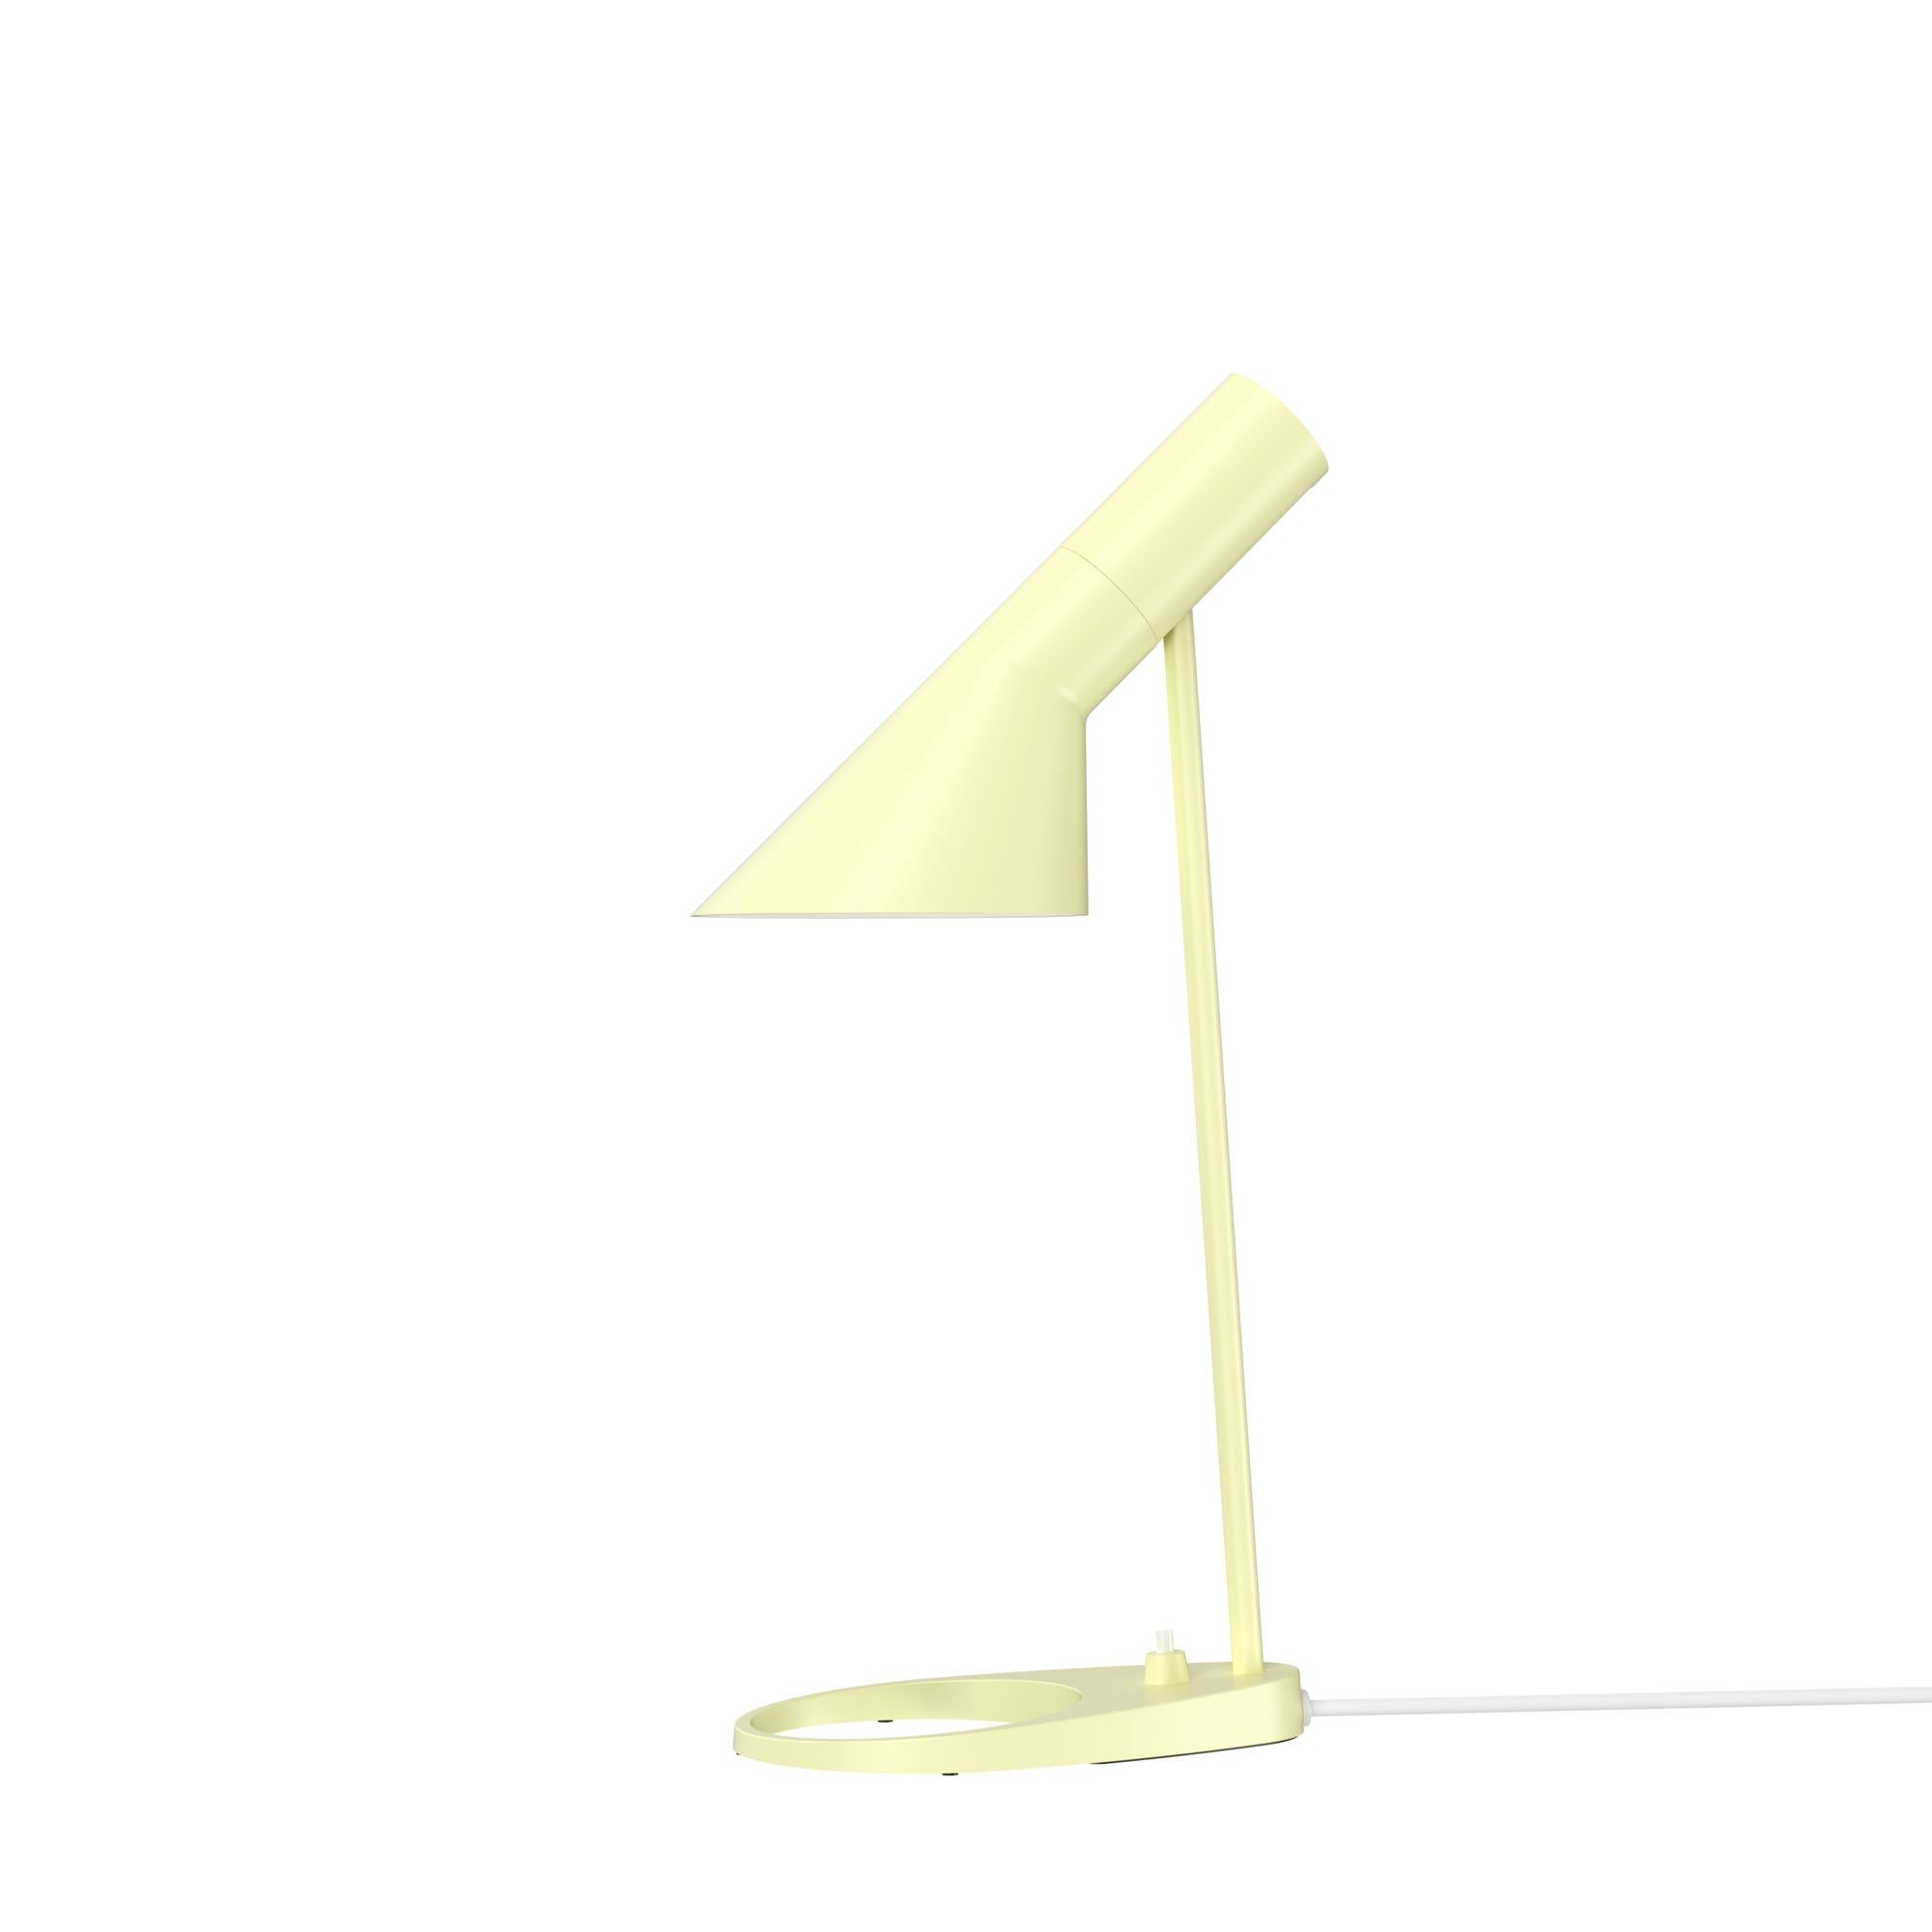 Arne Jacobsen 'AJ Mini' Table Lamp in Stainless Steel for Louis Poulsen For Sale 6